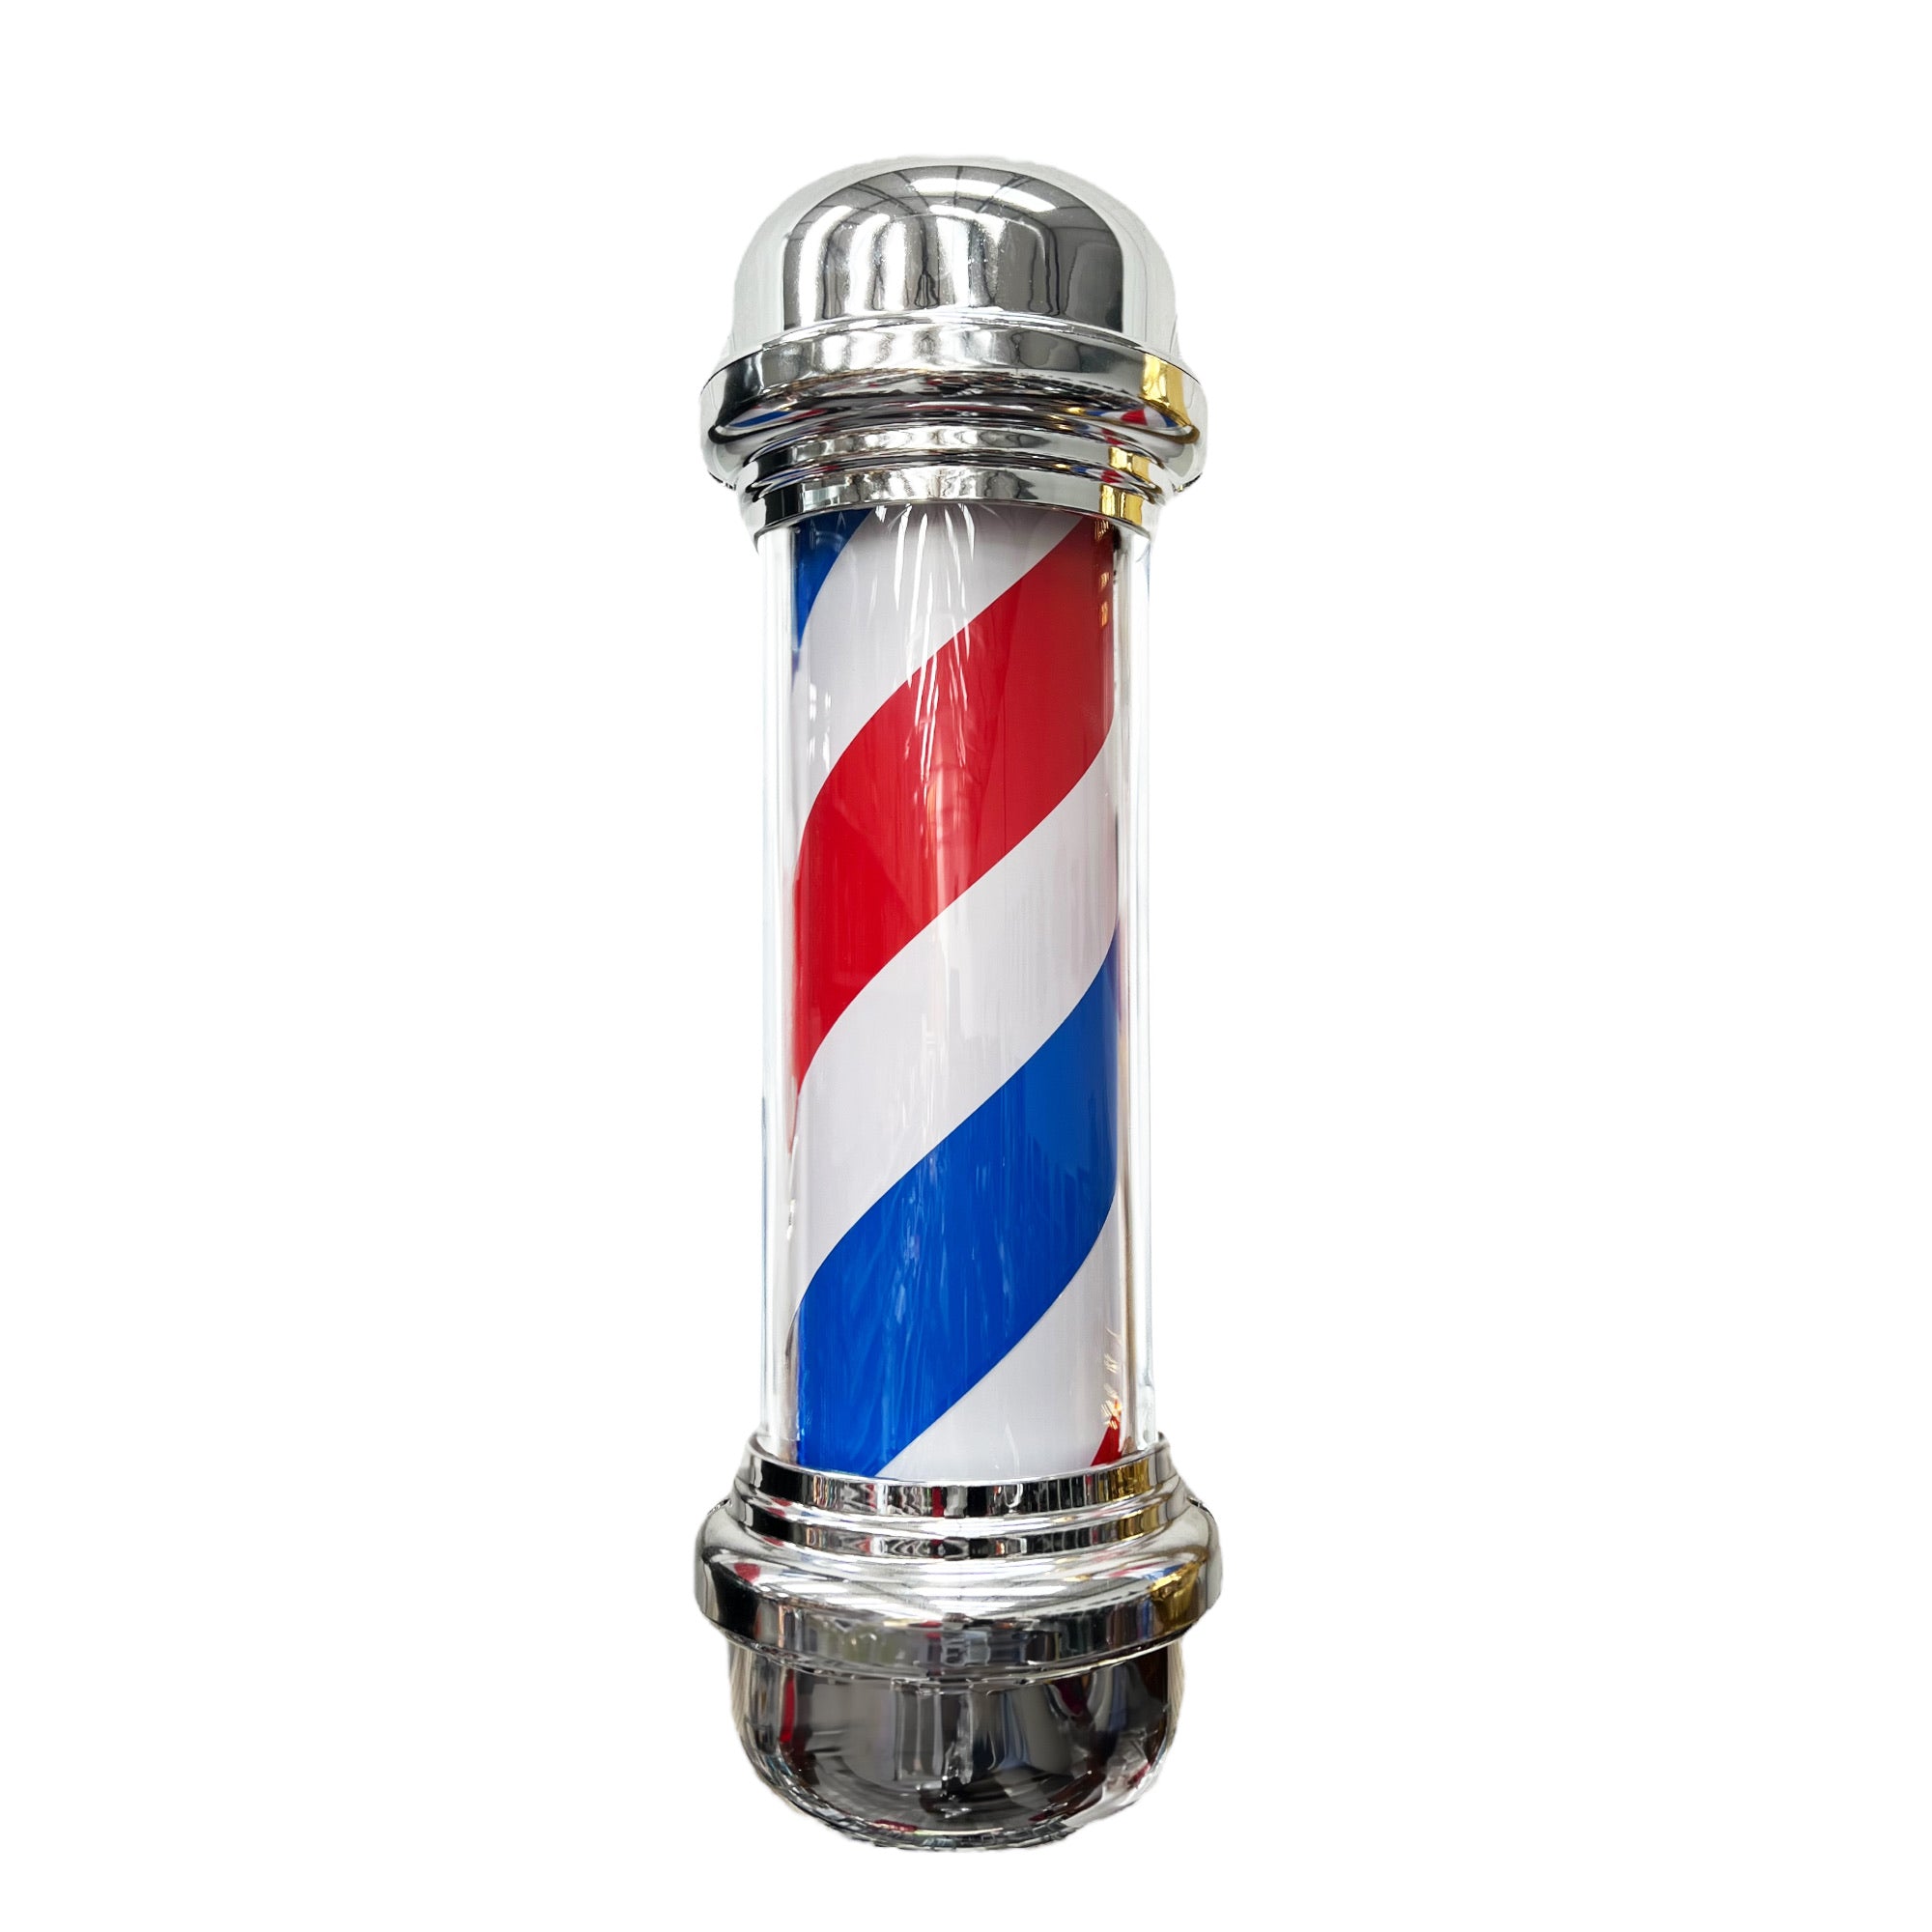 Gabri - Classic Barber Pole Light (Silver Red White Blue Stripes) 70cm